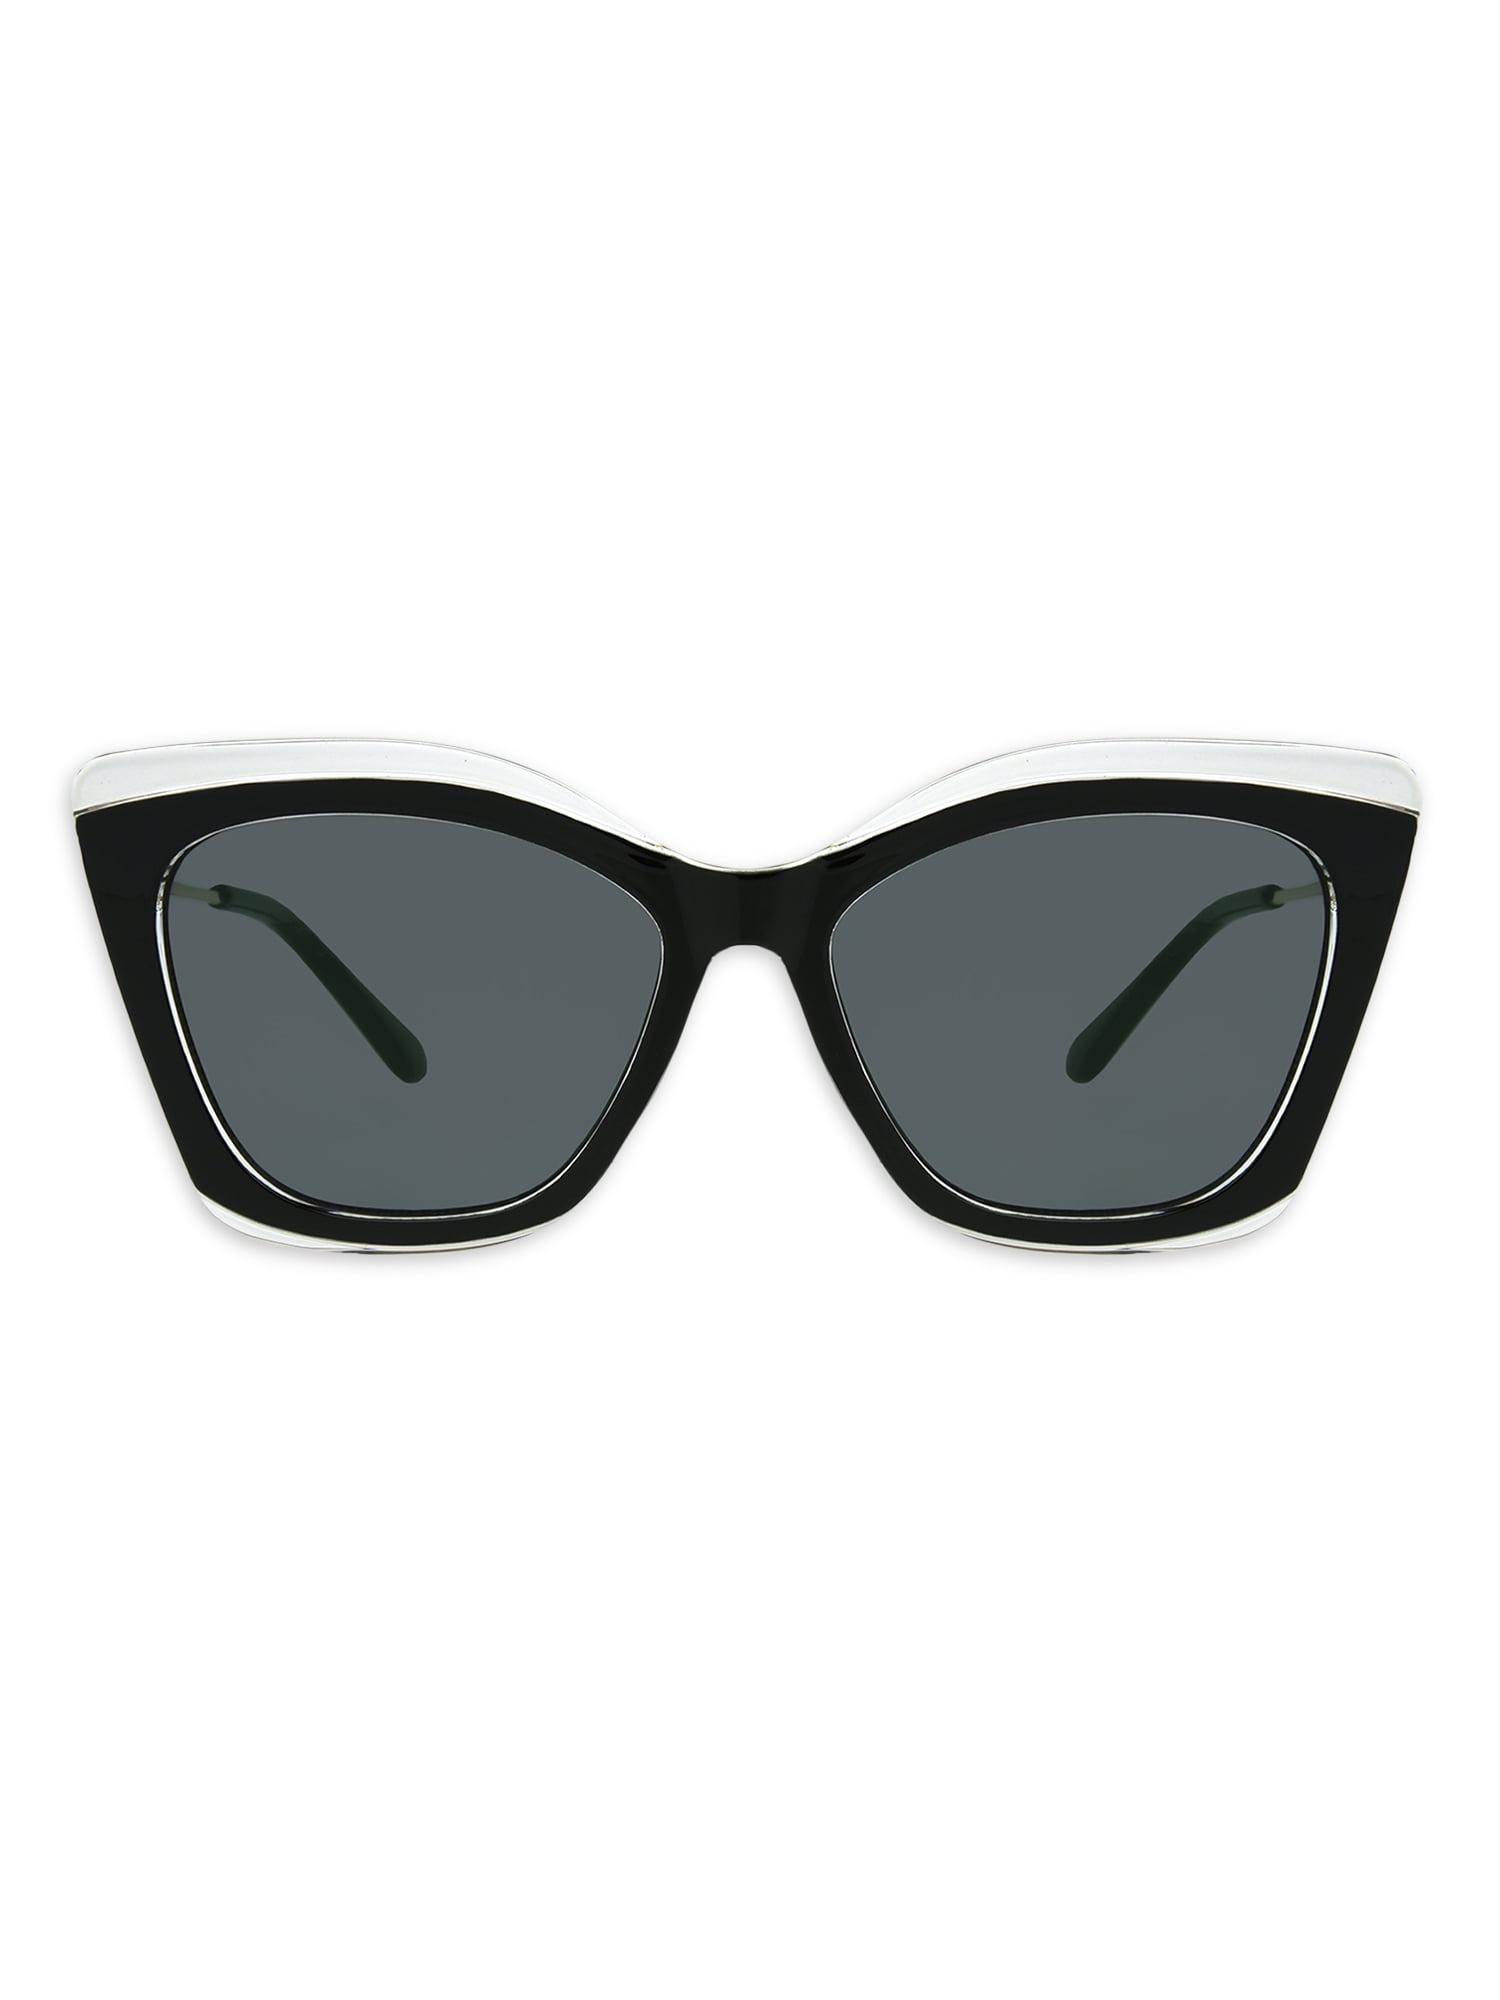 Saint Laurent Synthetic New Wave 244 Victoire Cat-eye Sunglasses in Black Grey Womens Sunglasses Saint Laurent Sunglasses 